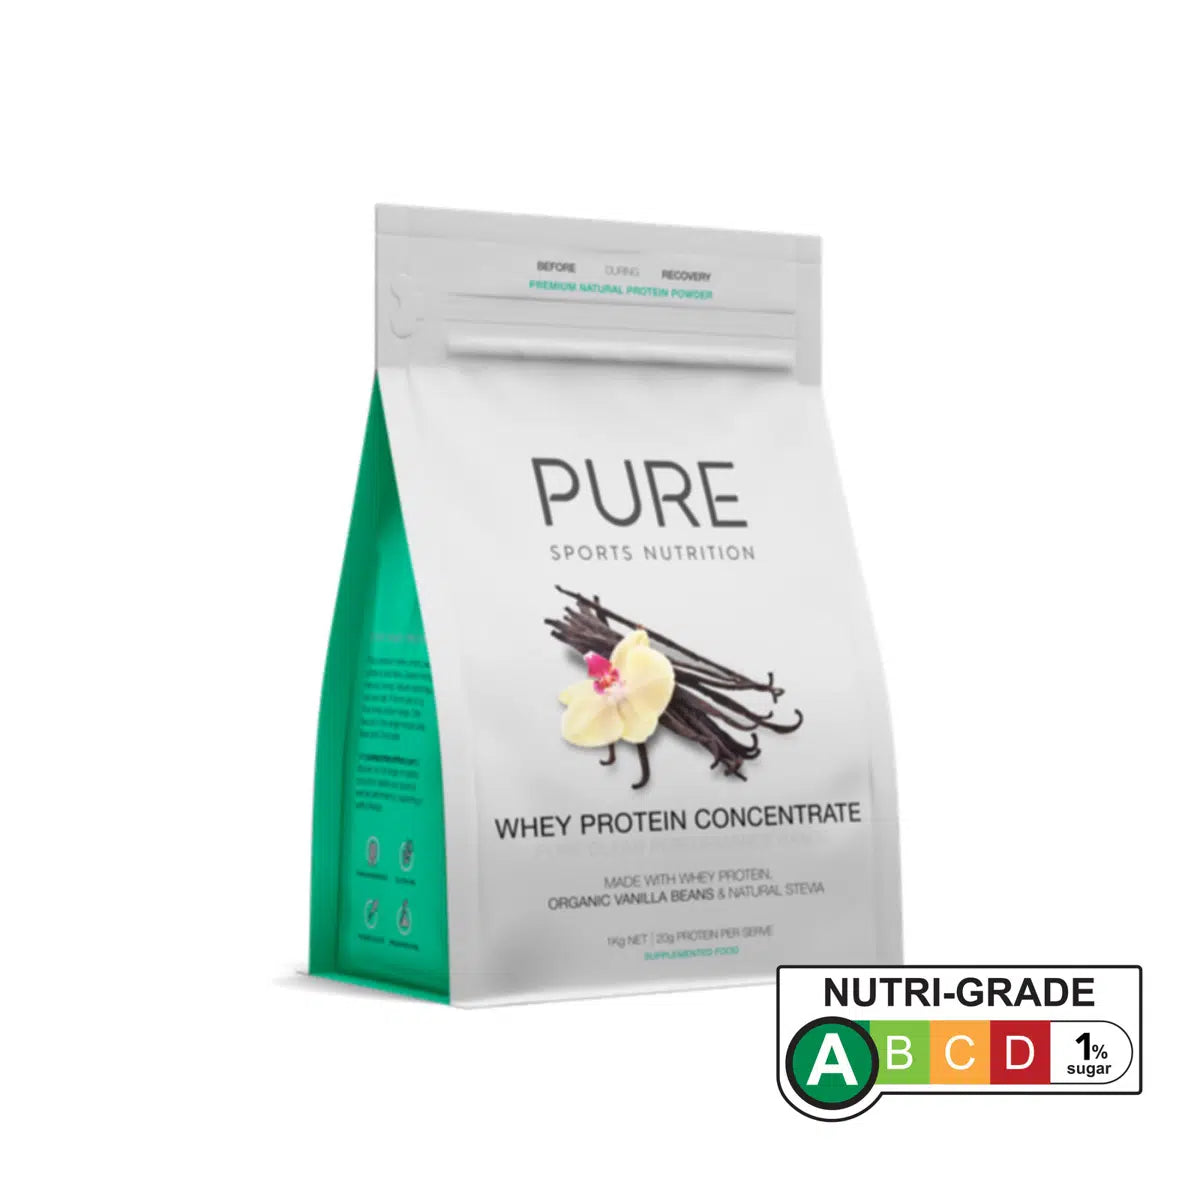 PURE Whey Protein  -  Organic Vanilla & Cinnamon - 17 serves or 33 serves